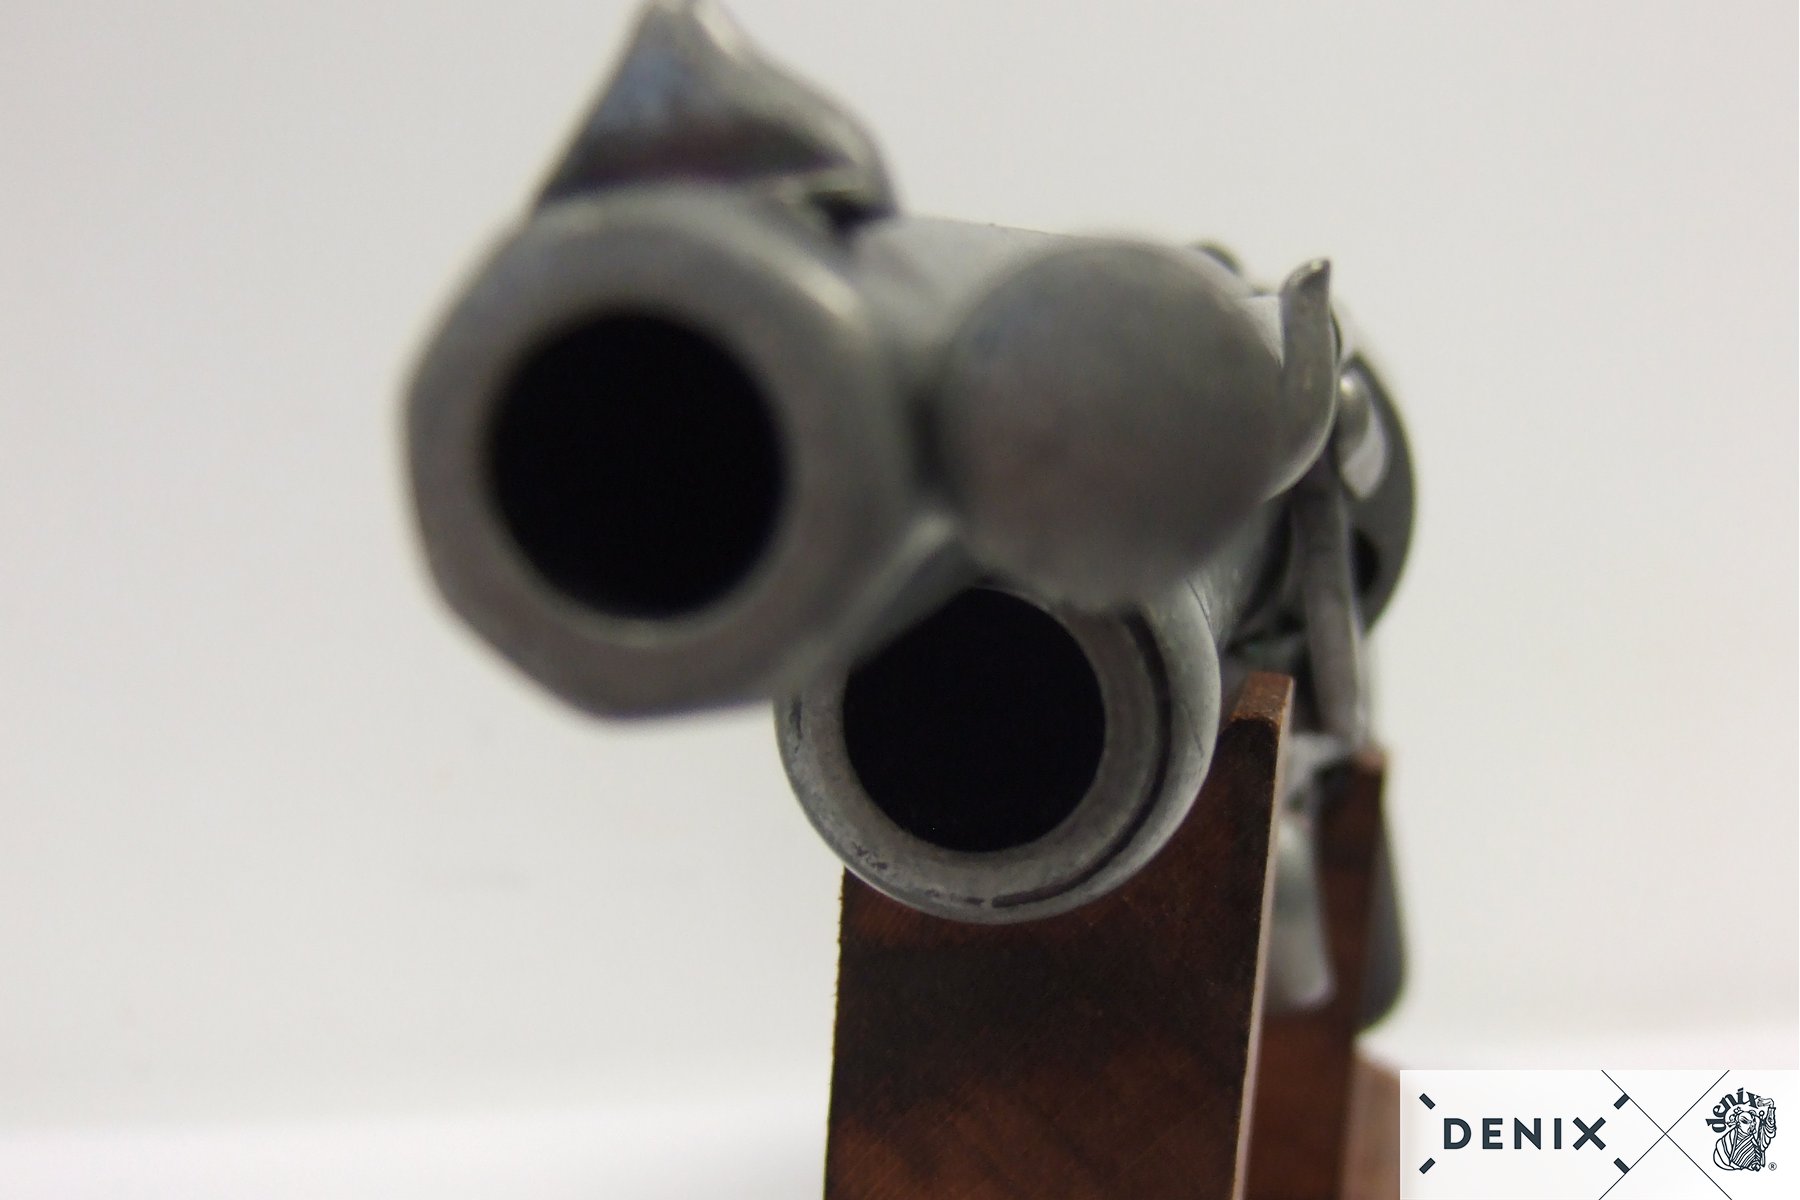 American Civil War Confederate Lemat Revolver Usa Revolvers